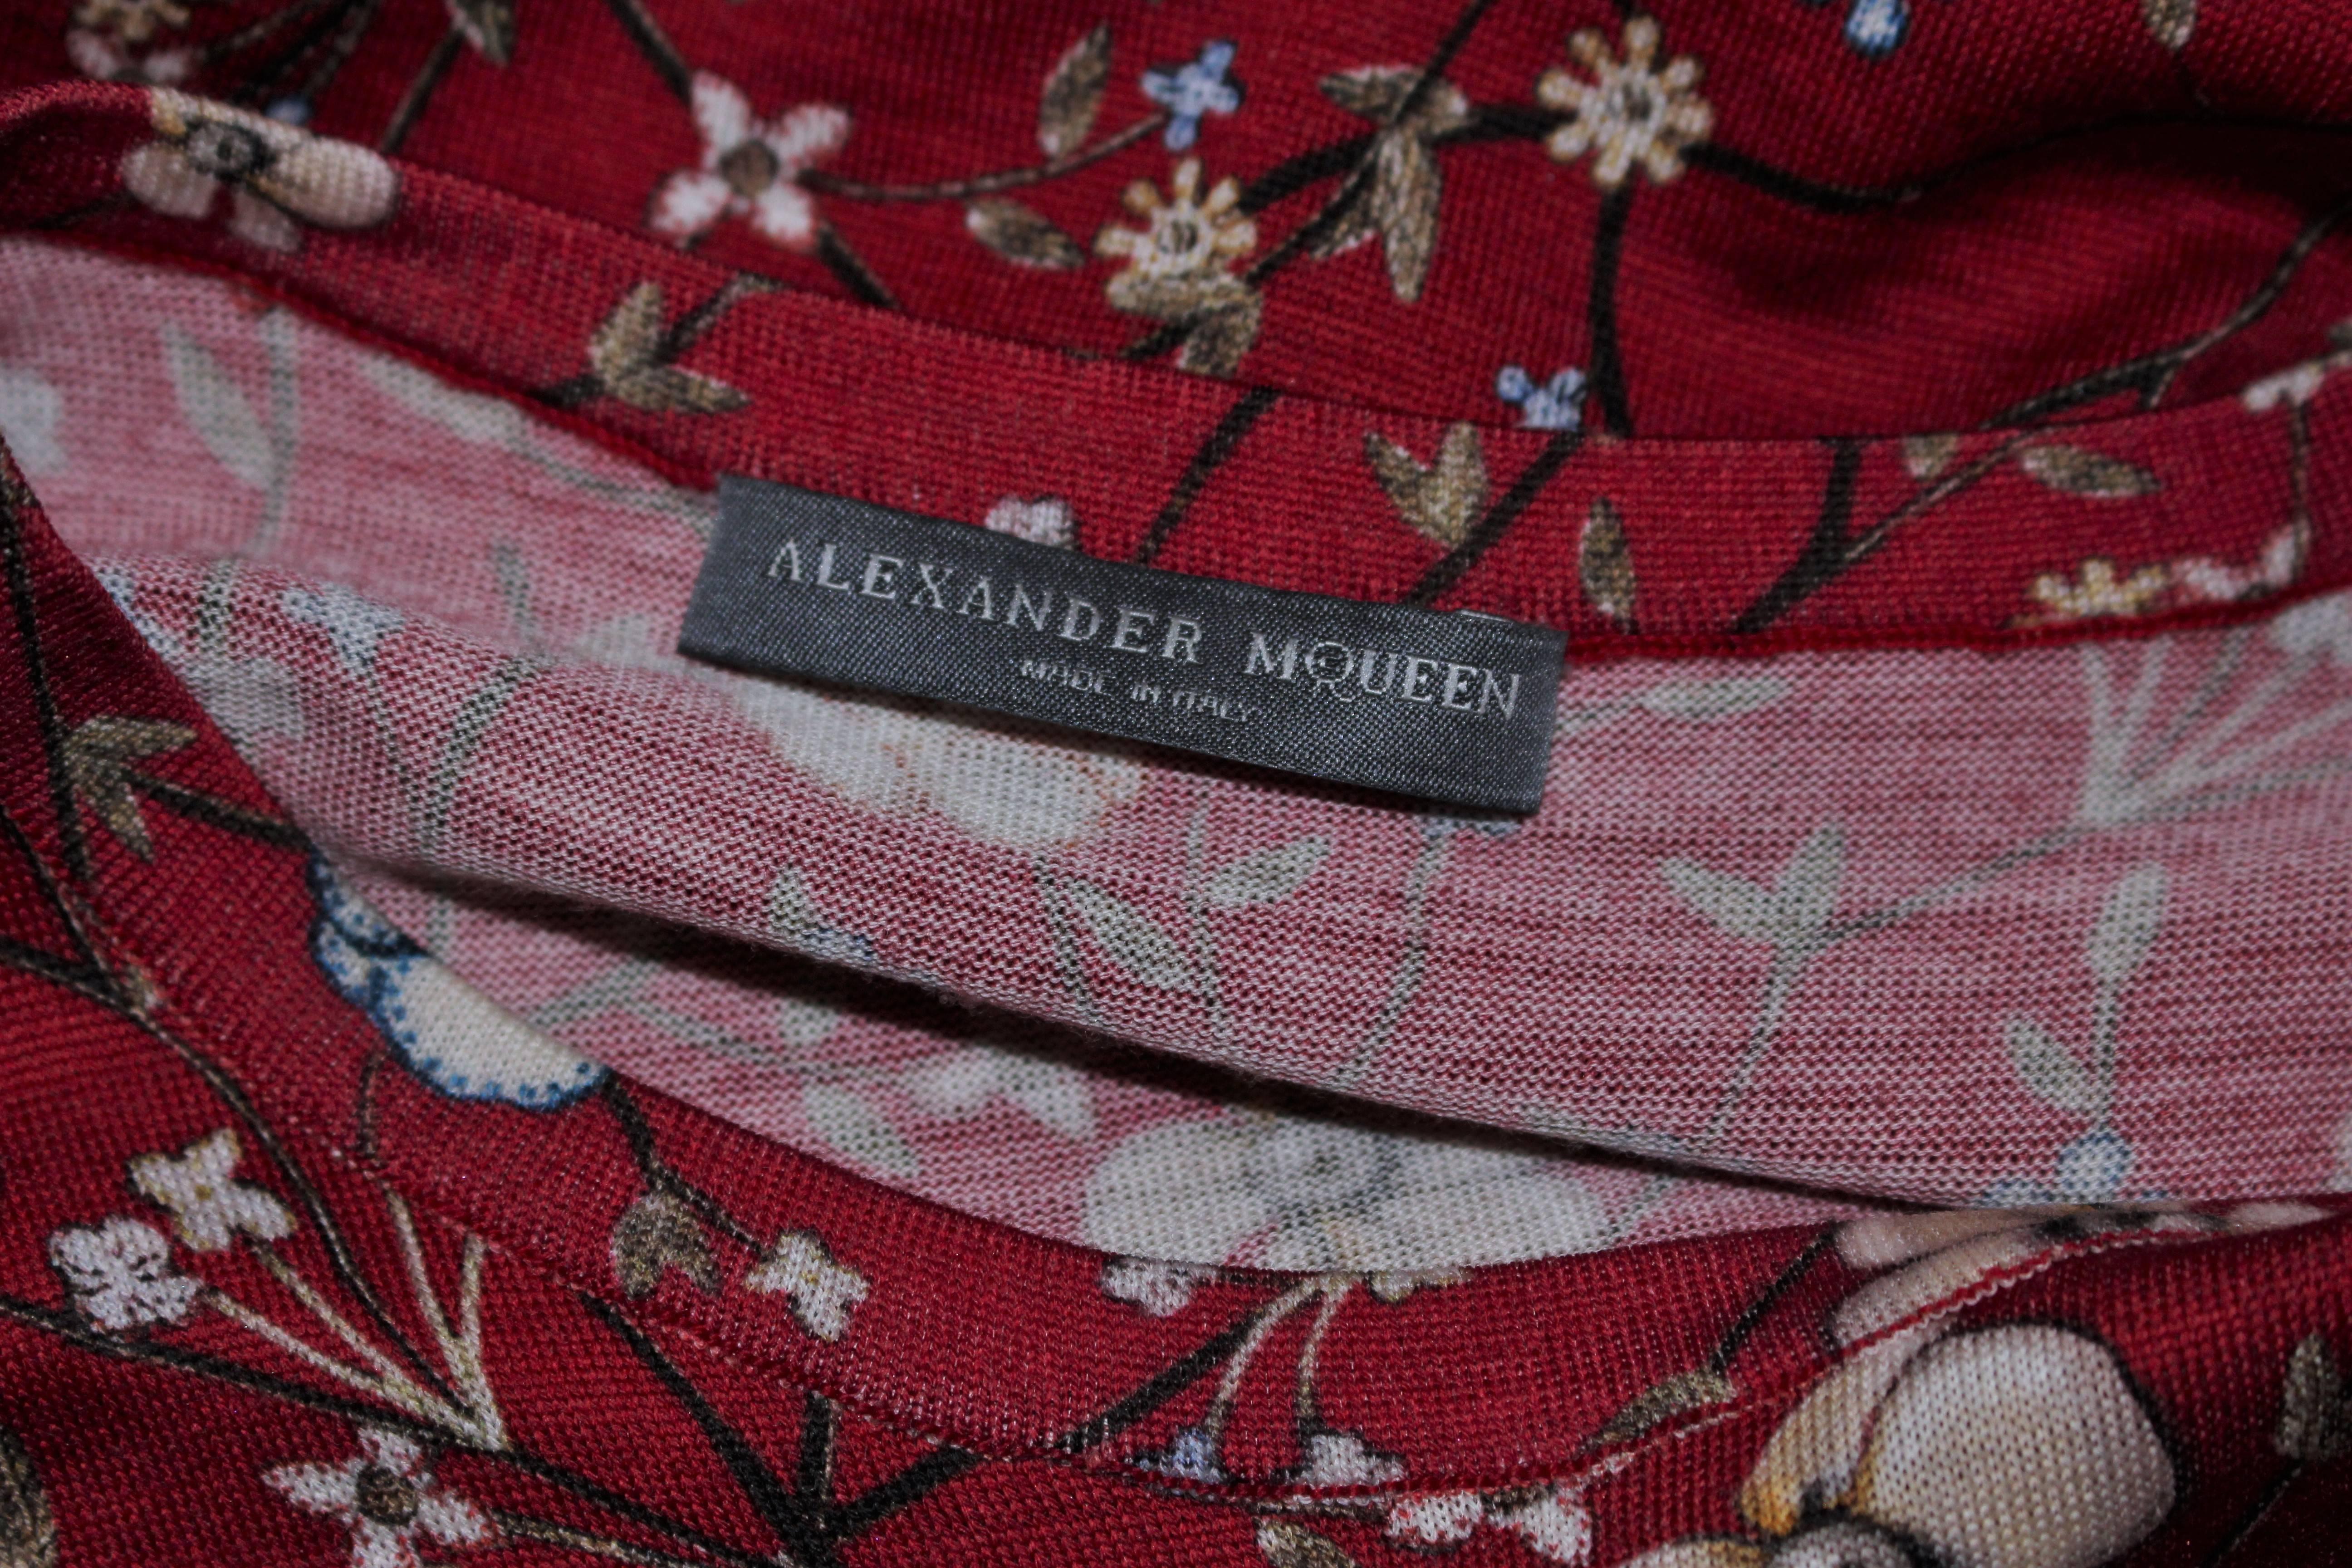 ALEXANDER MCQUEEN Floral Print Stretch Wool Dress Size S 6